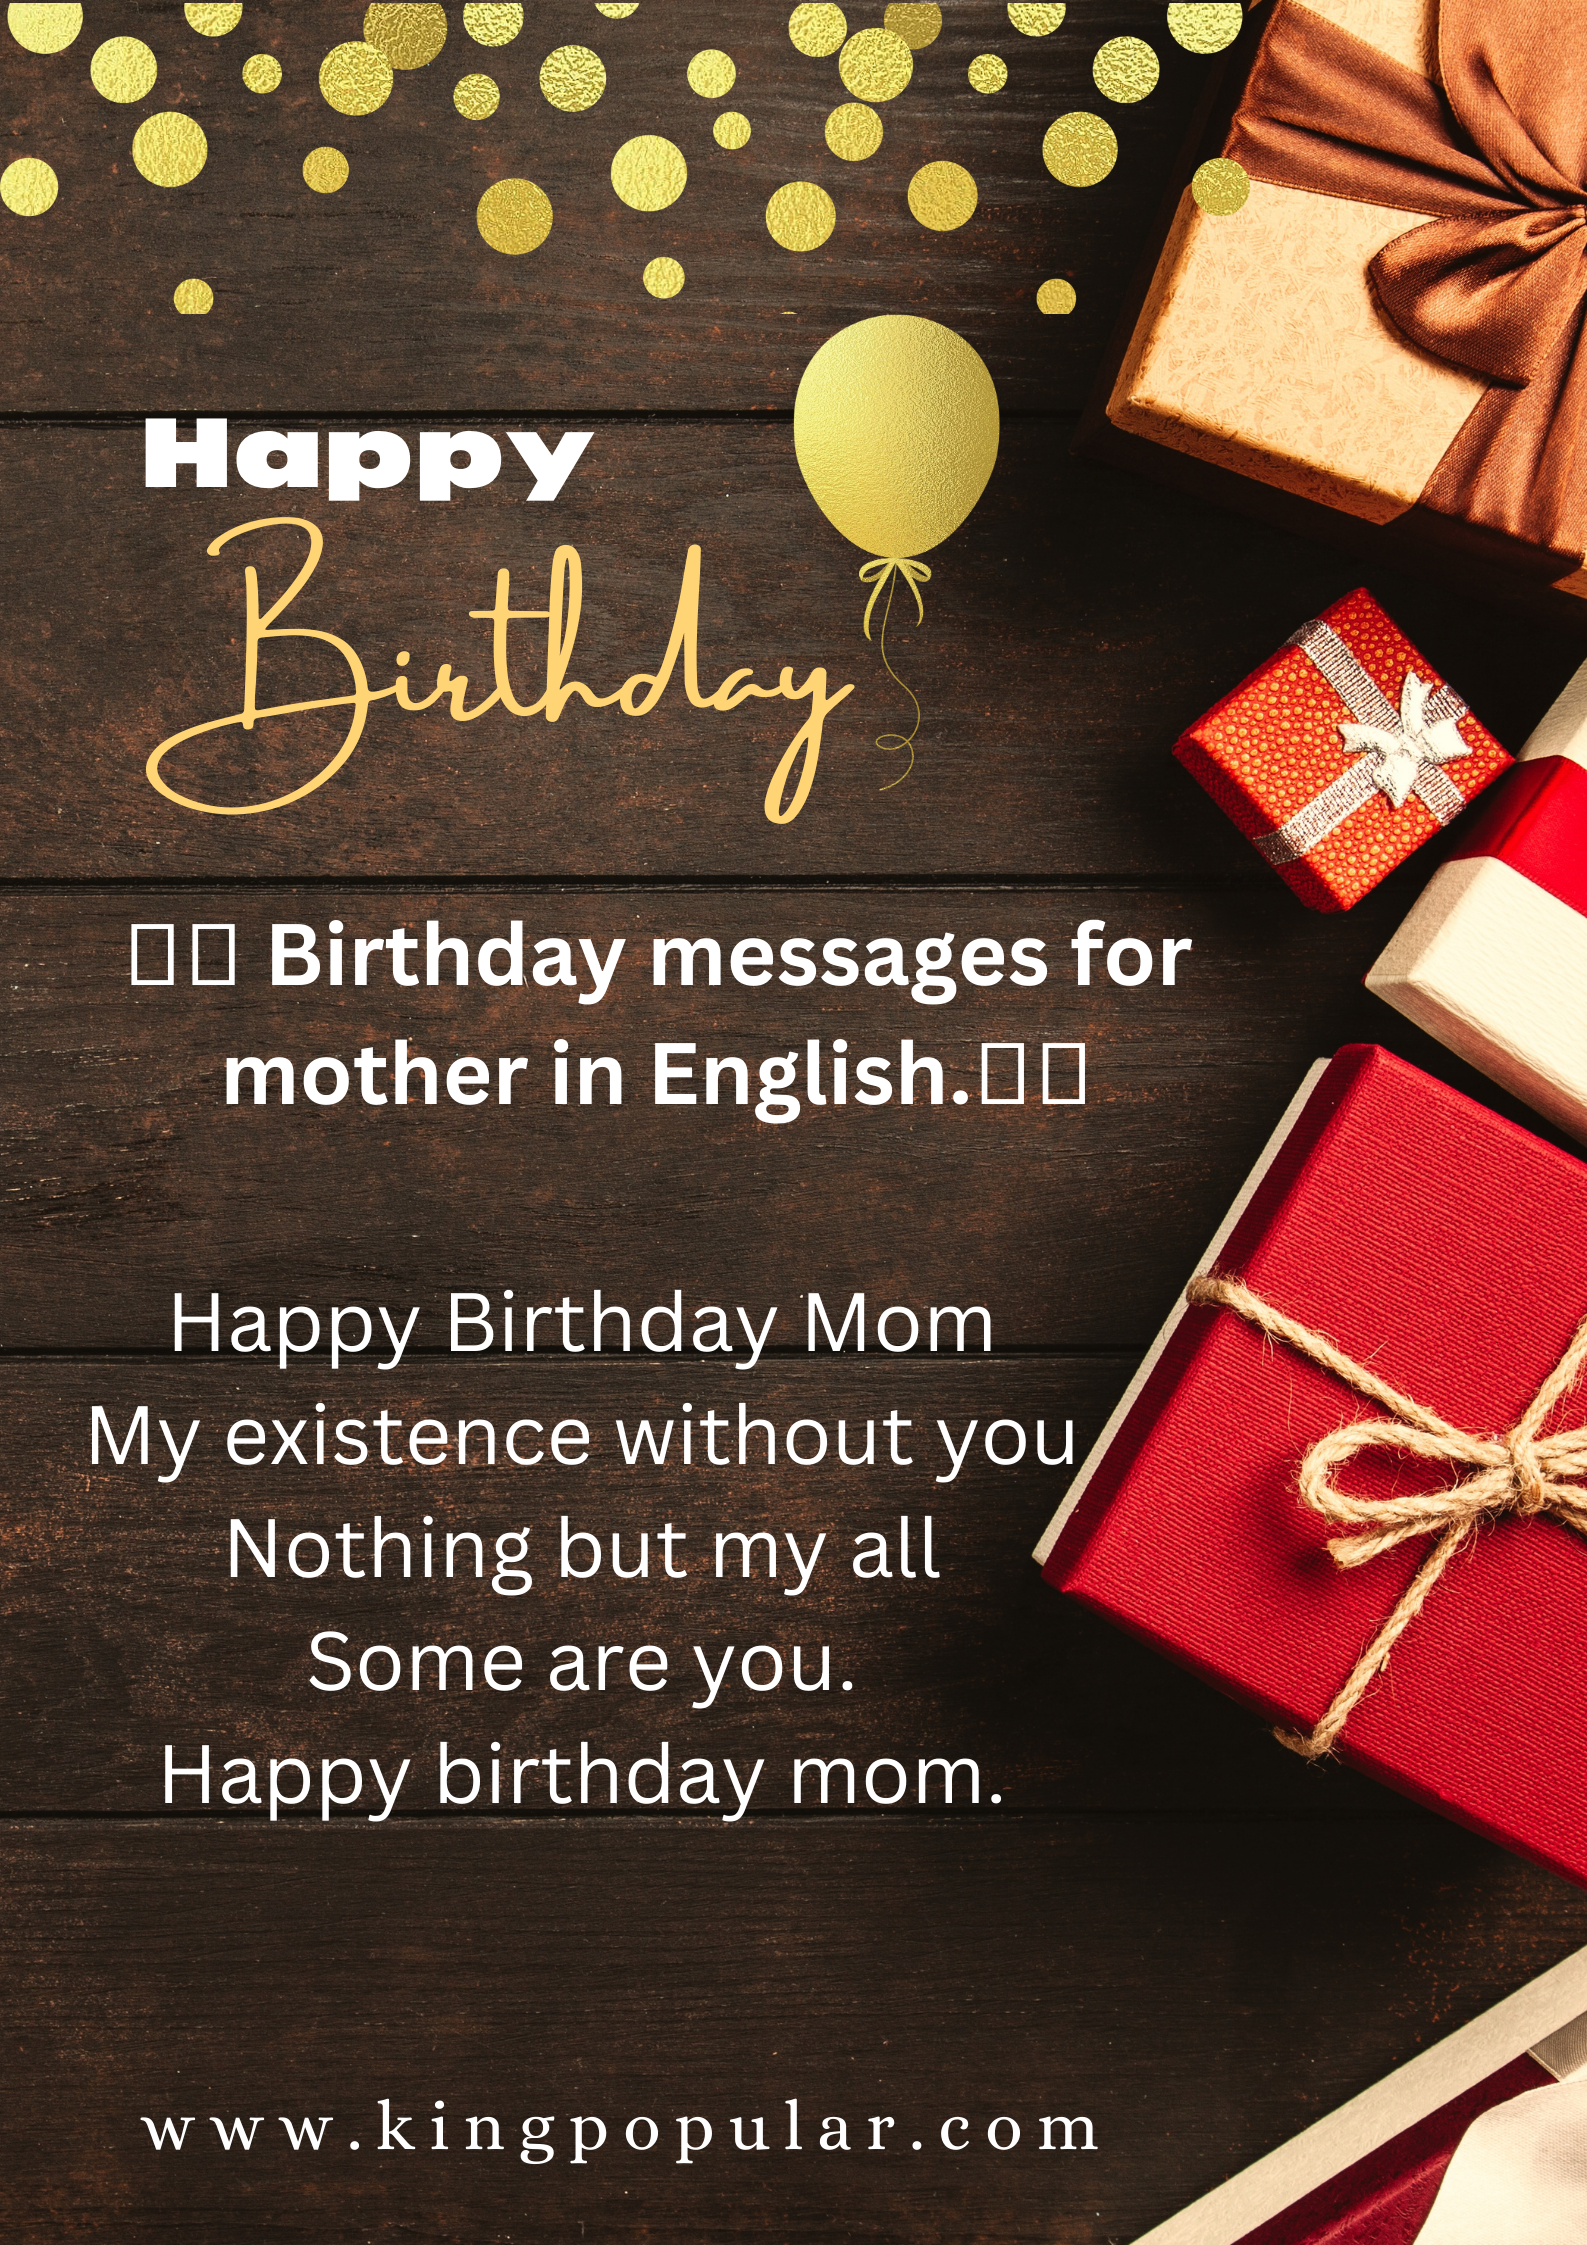 Happy Birthday wishes for Mom